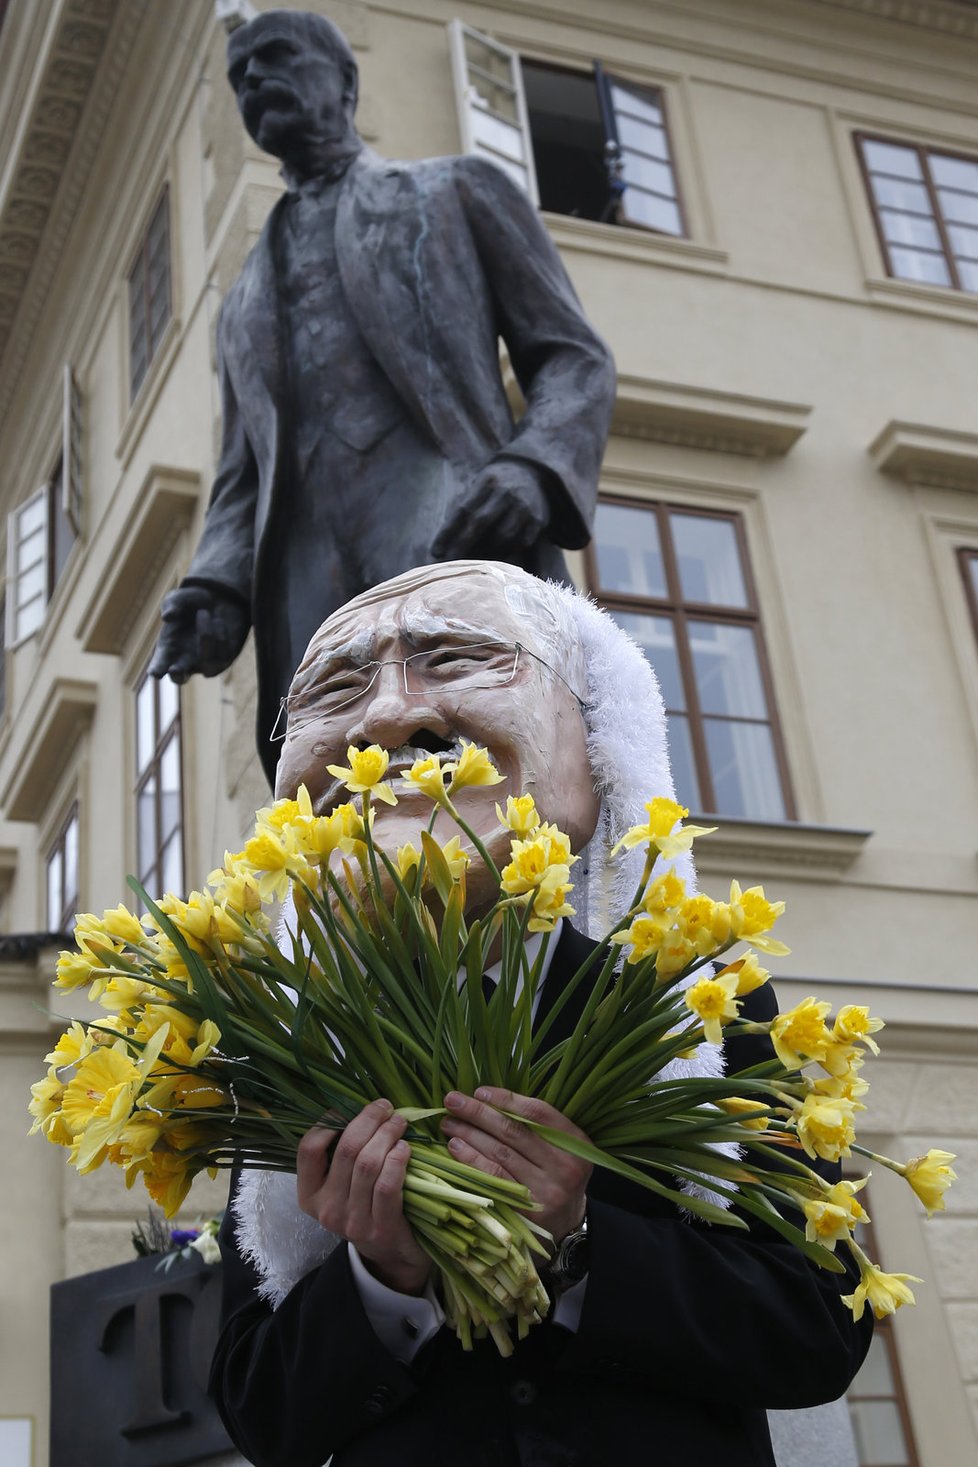 Figurína prezidenta Klause s narciskami: Jasná narážka na Klausův údajný narcismus